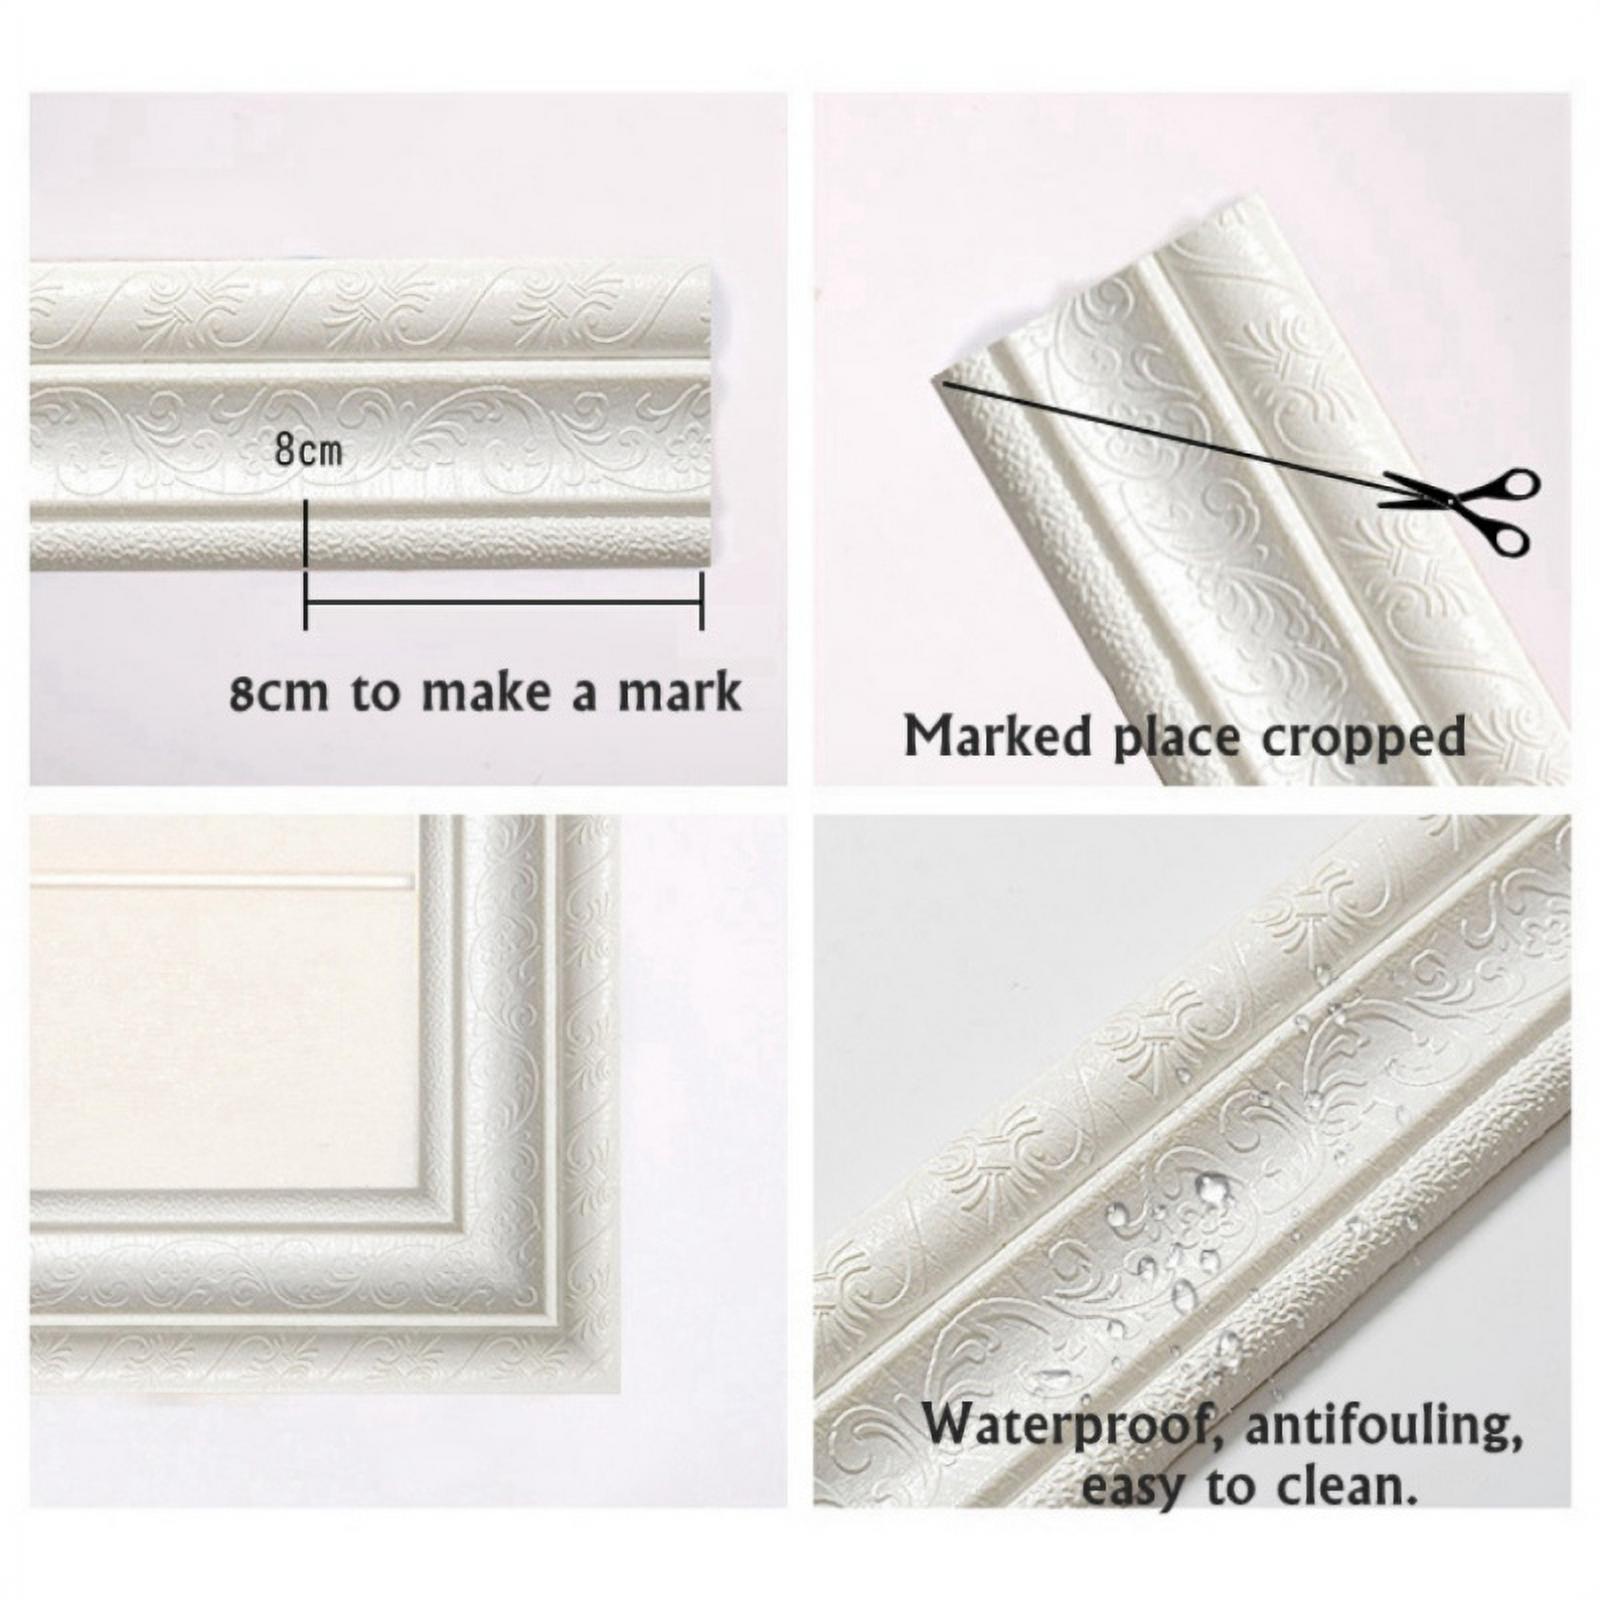 3D Self-Adhesive Foam Wallpaper, Waterproof Wallpaper Wall Border Foam Mirror Borders Wall Decor Tiles Sticker for Kitchen Bathroom - image 5 of 8